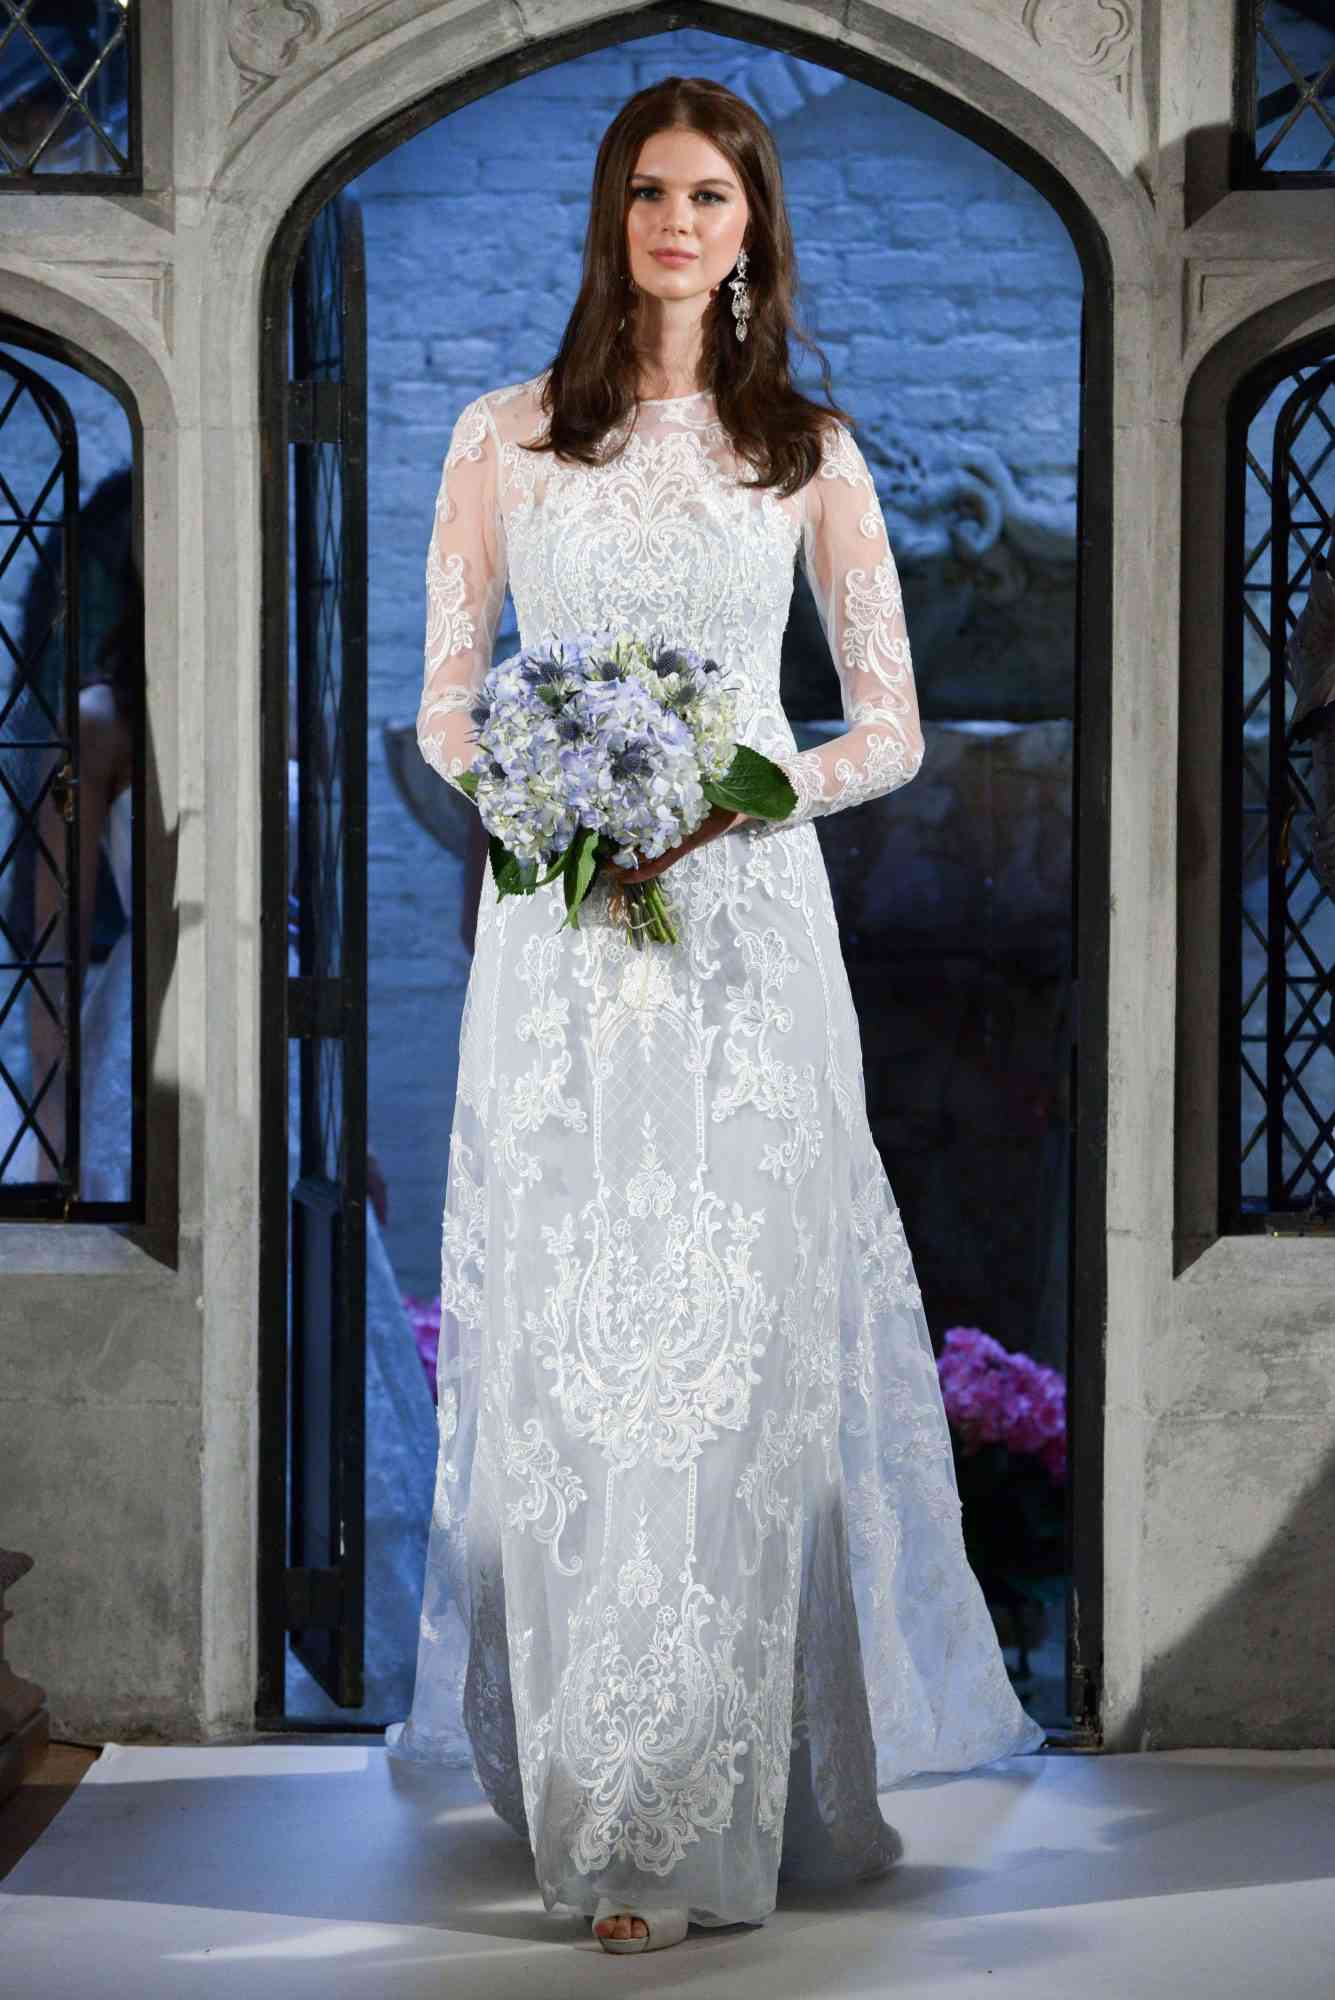 oleg cassini long sleeve wedding dress